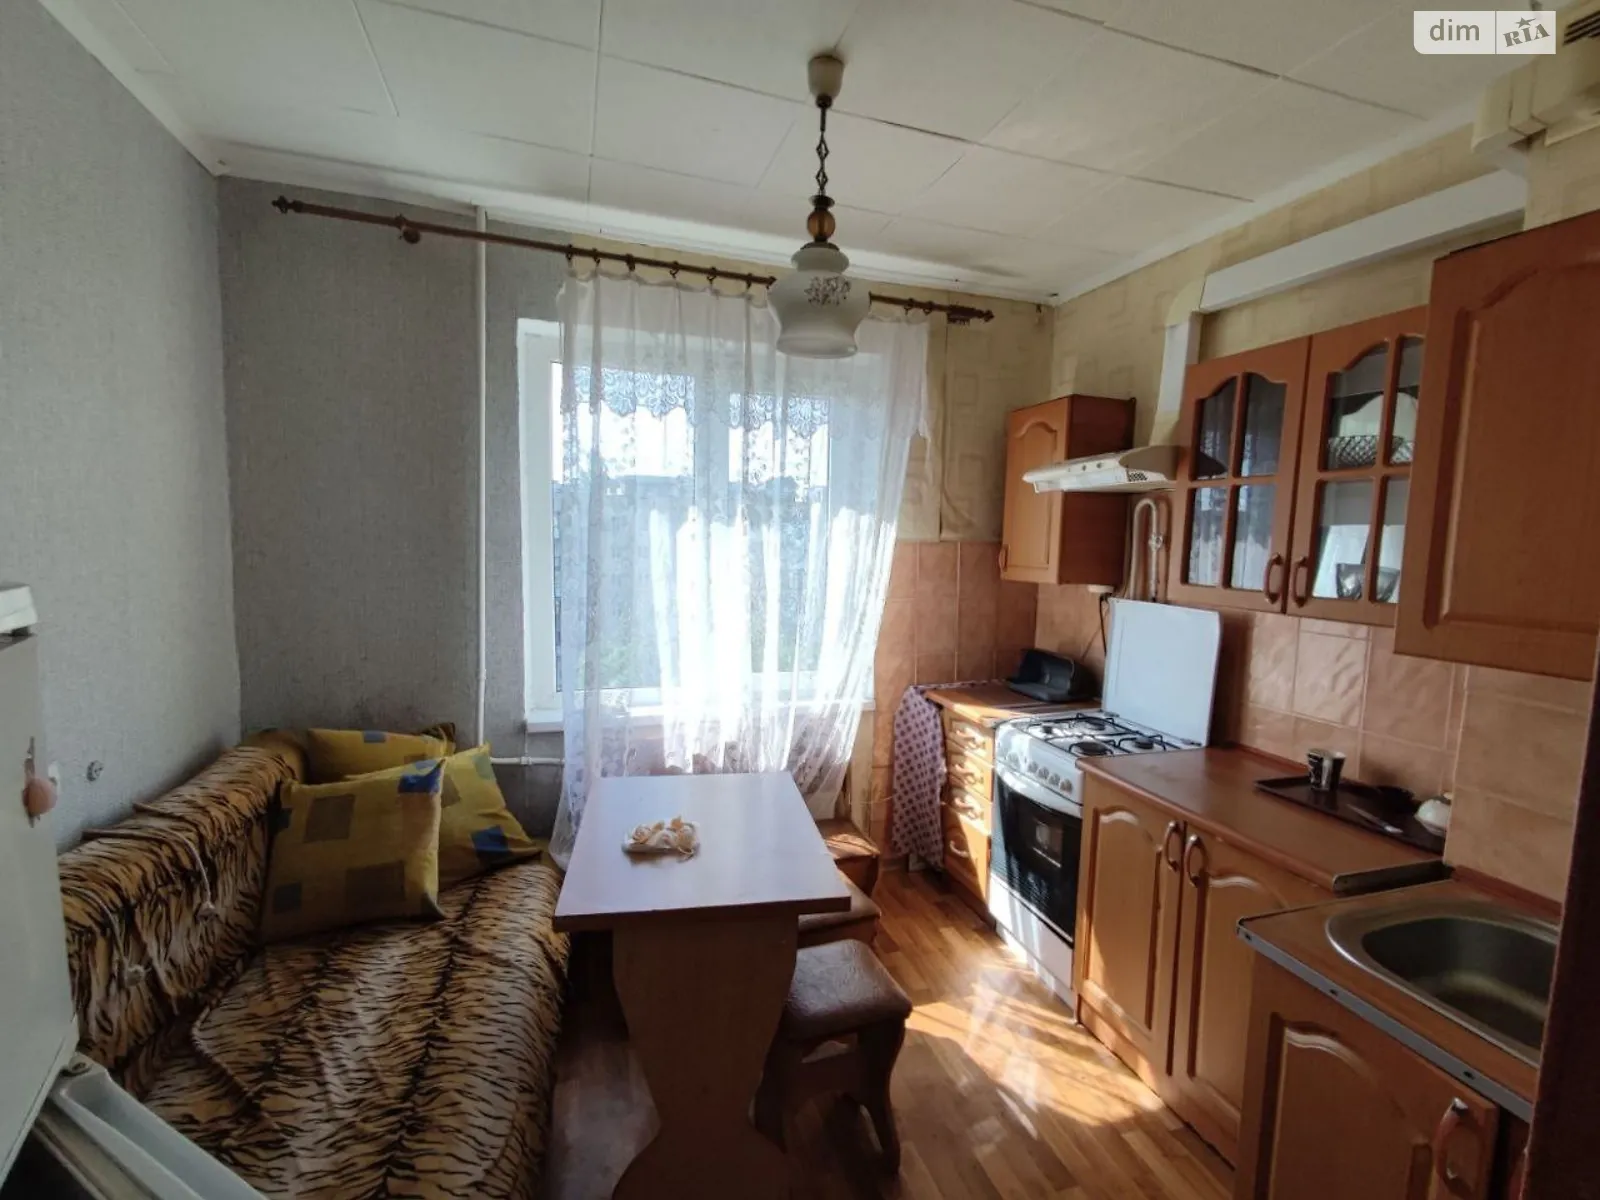 Сдается в аренду 1-комнатная квартира 34 кв. м в Одессе, ул. Академика Королева, 1 - фото 1